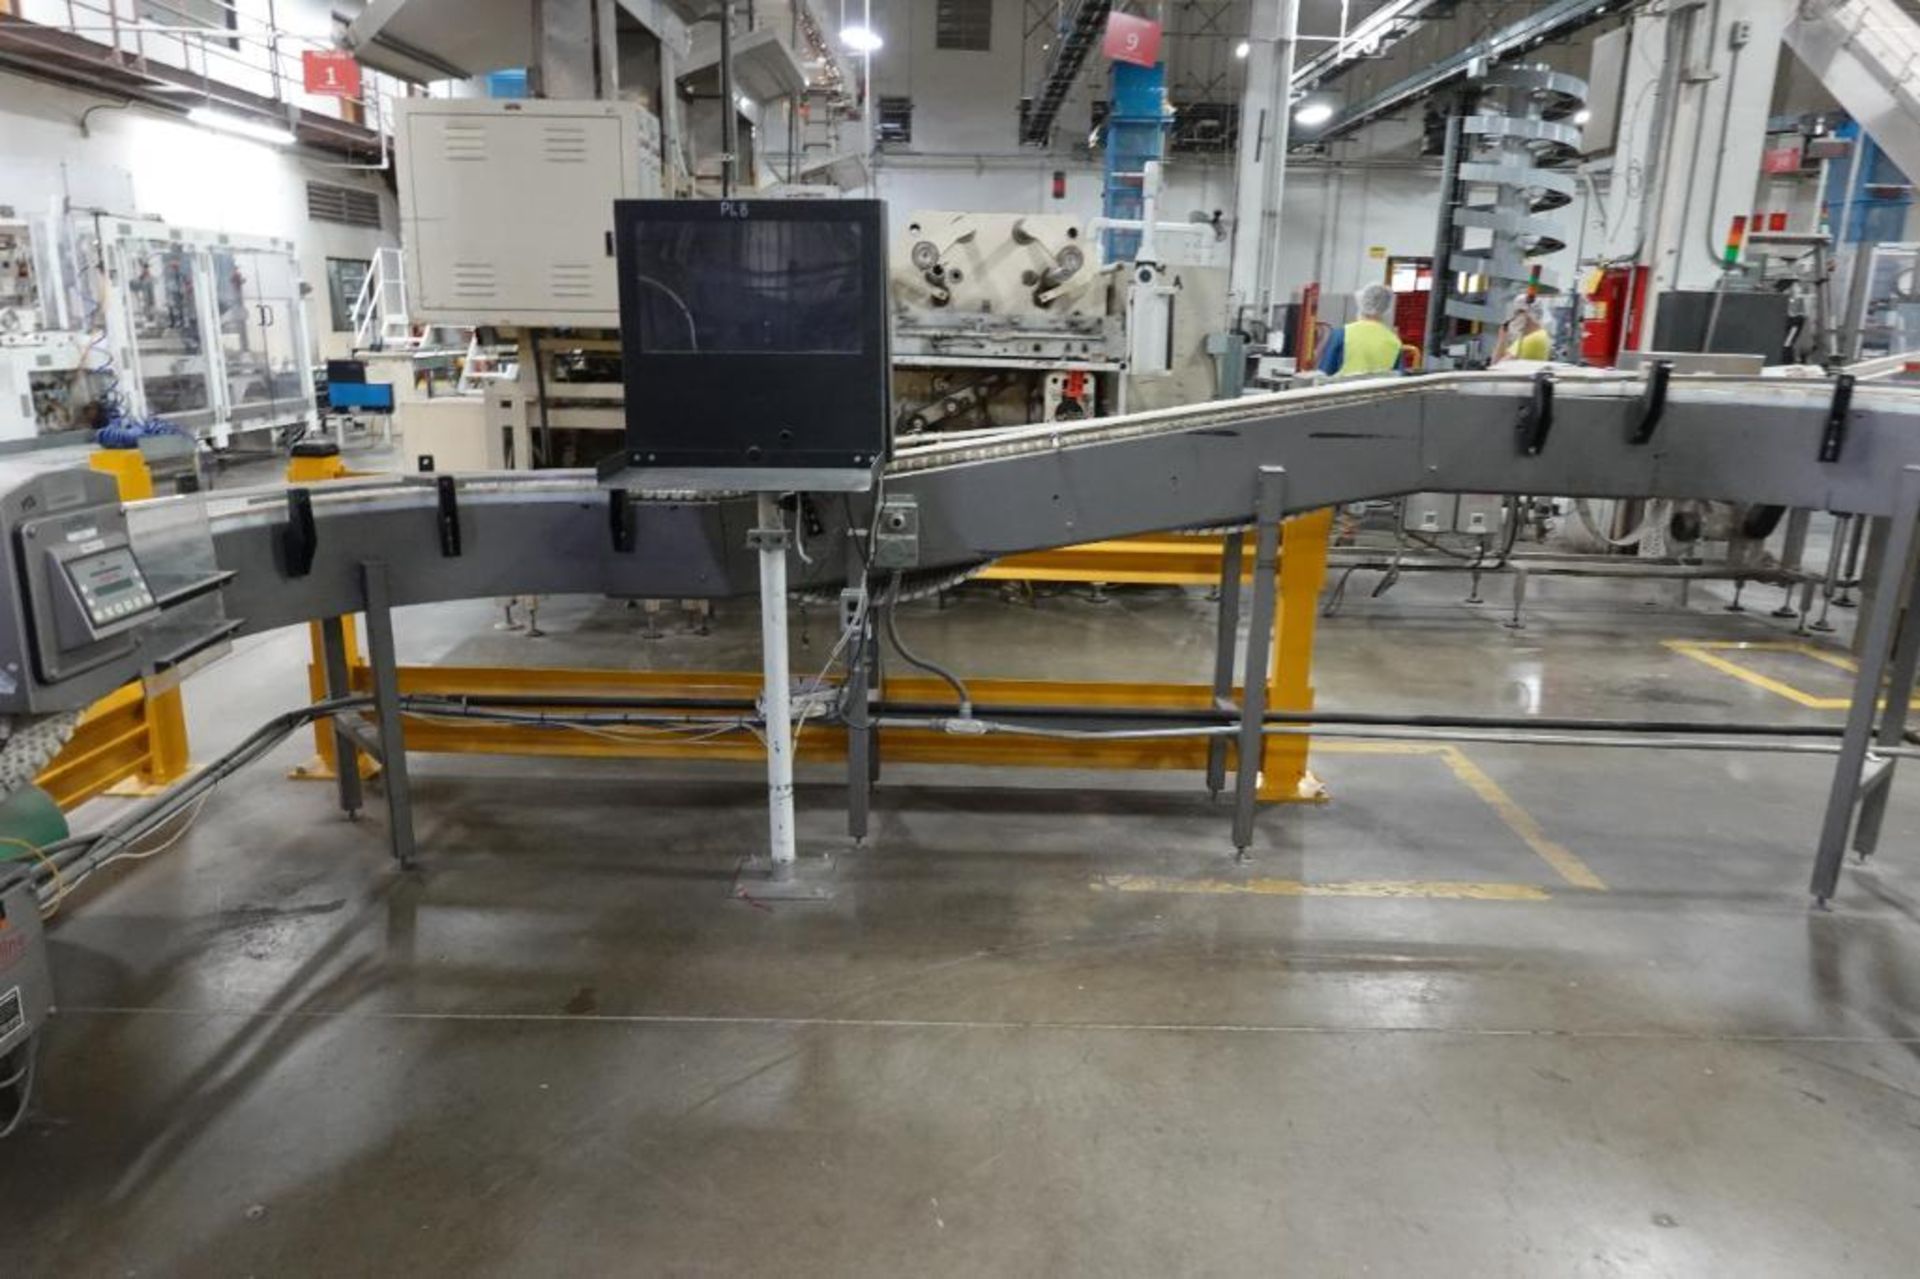 Safeline metal detector with conveyor - Image 2 of 14